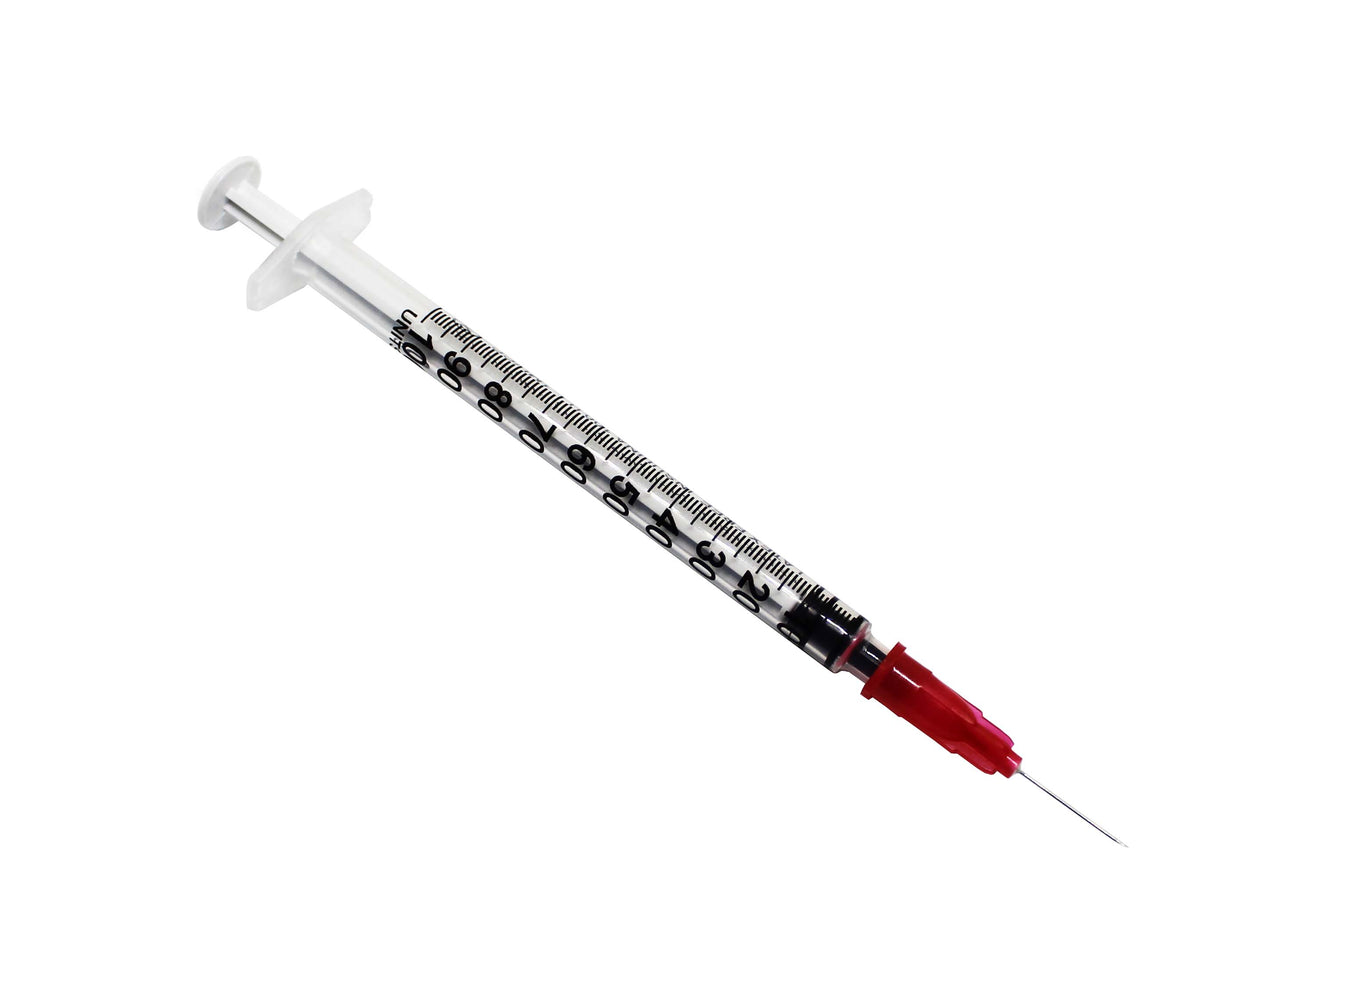 1ml insulin syringe 29g hypodermic needle 